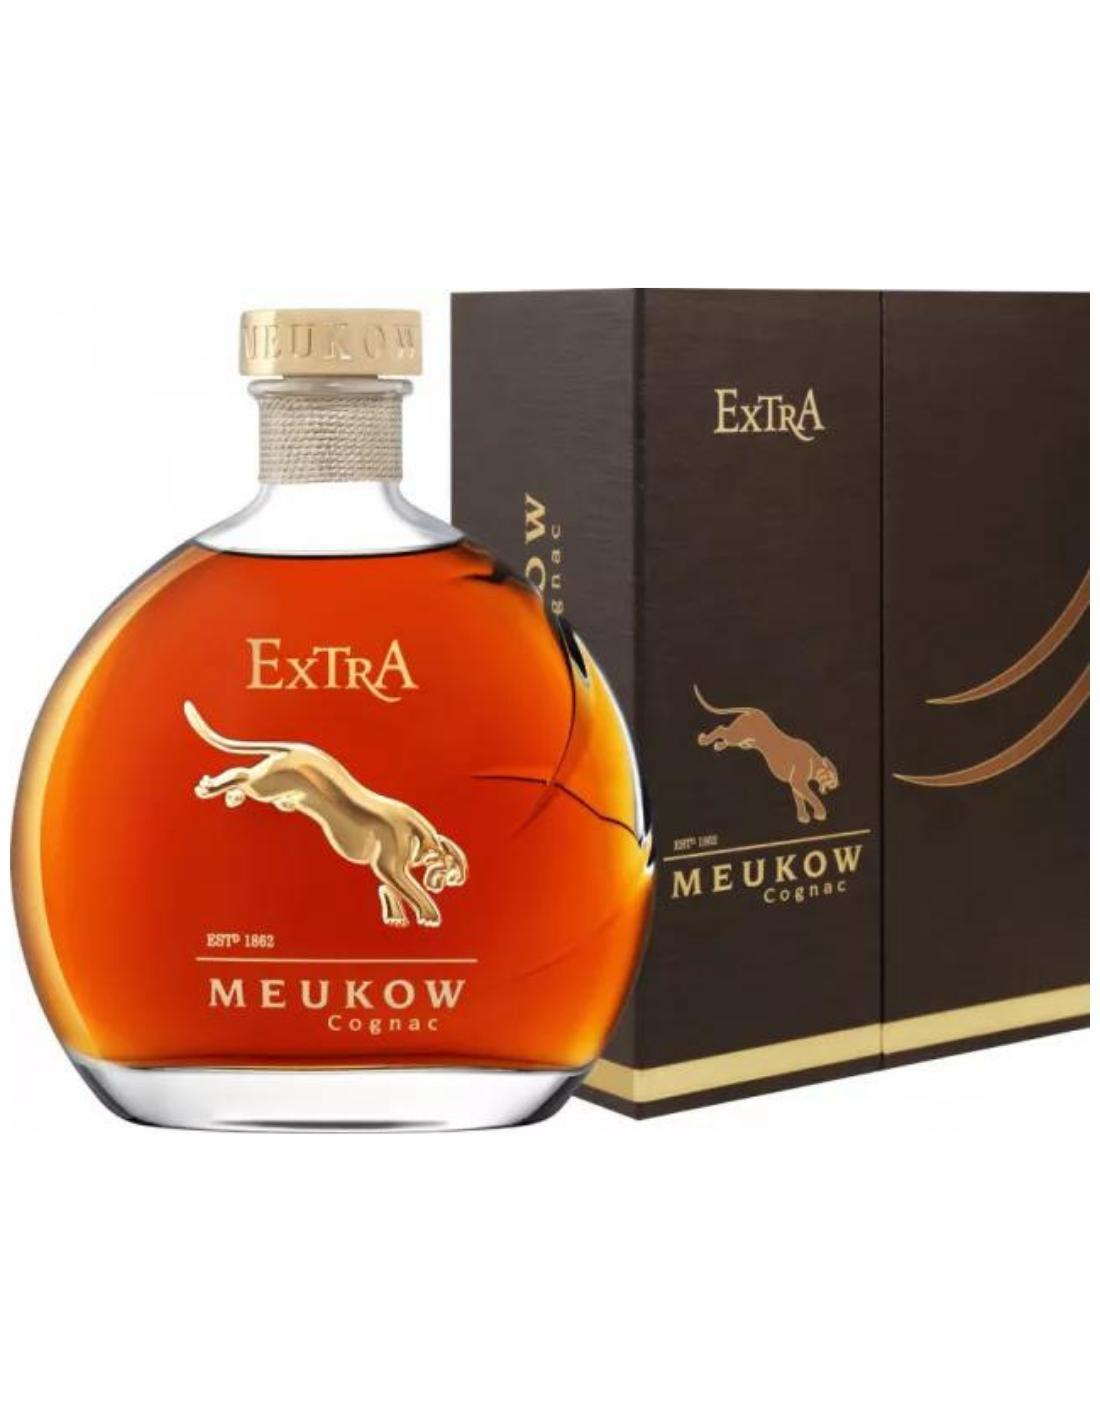 Coniac Meukow Extra, 40% alc., 0.7L, Franta alcooldiscount.ro